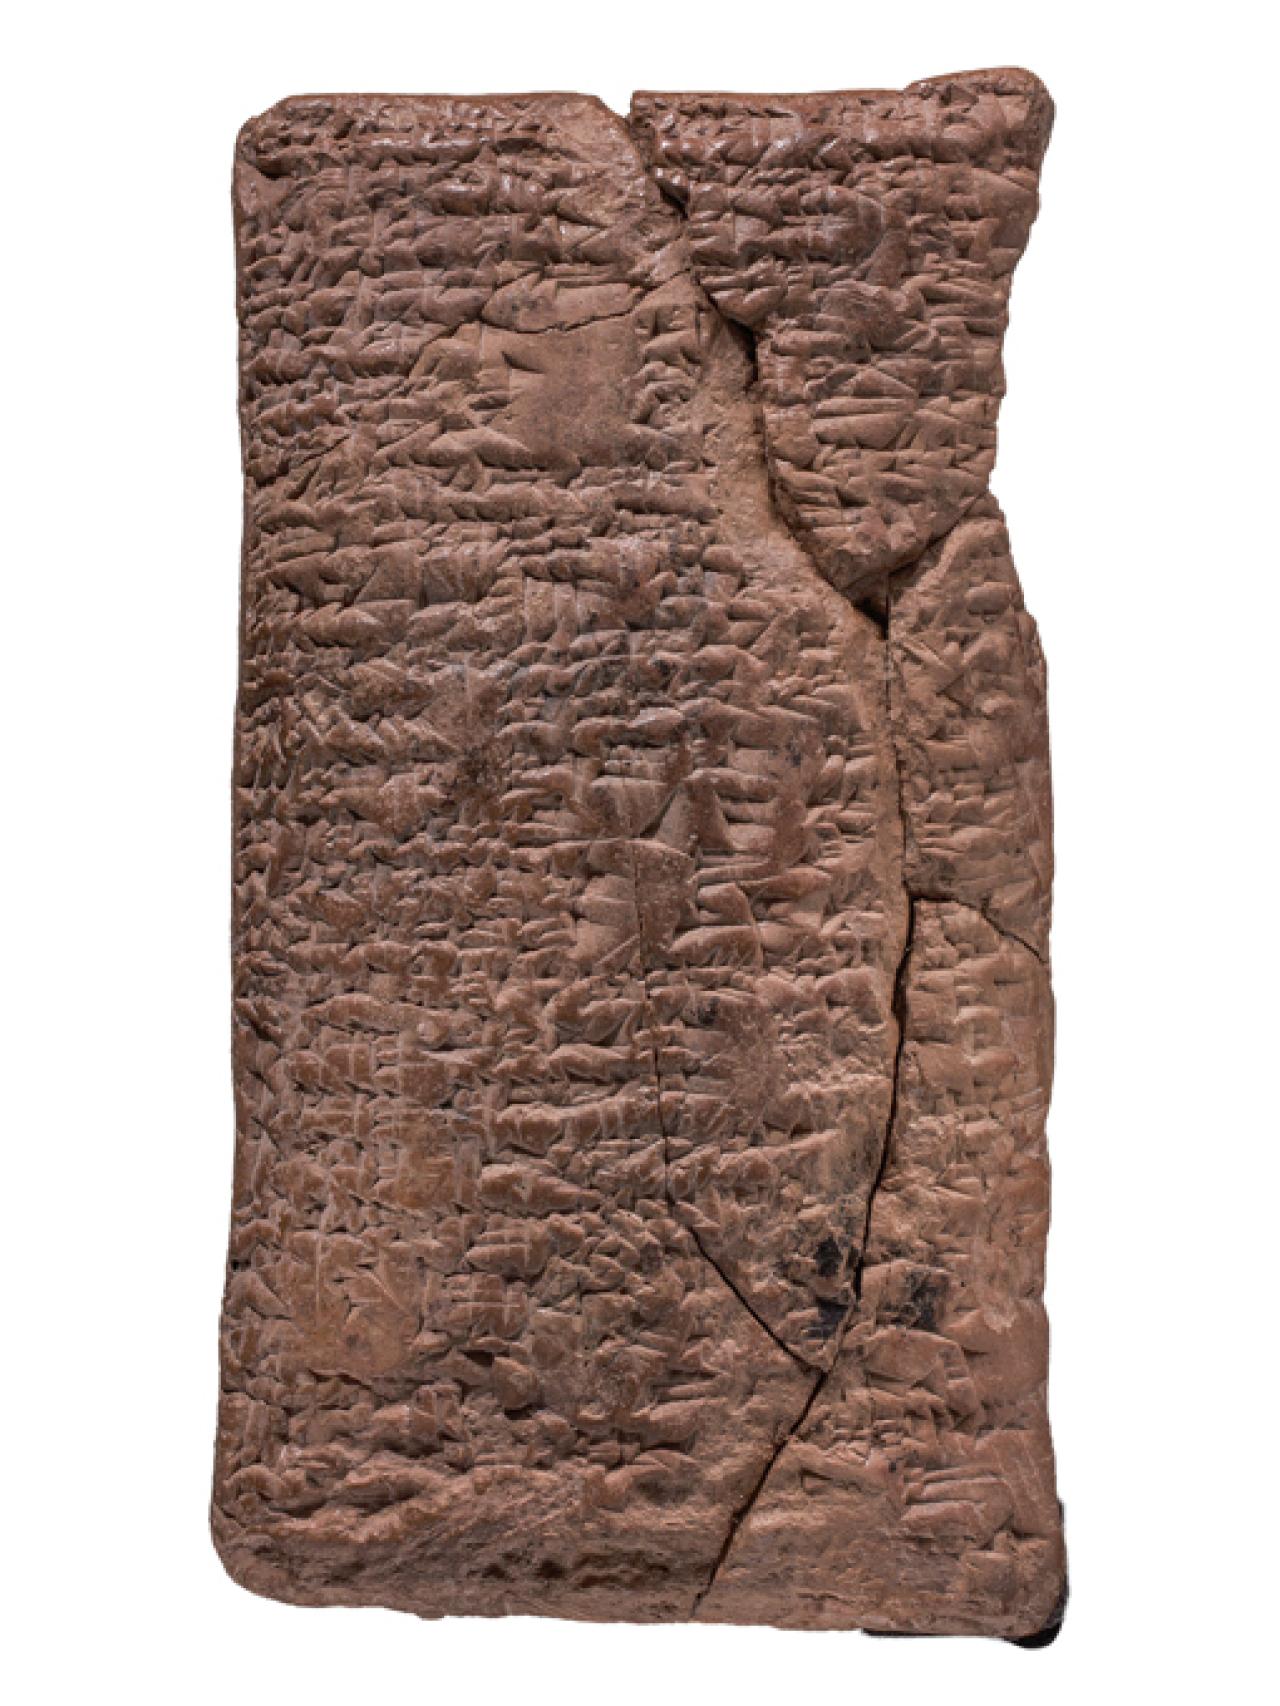 La tabla cuneiforme descifrada por Irving Finkel.